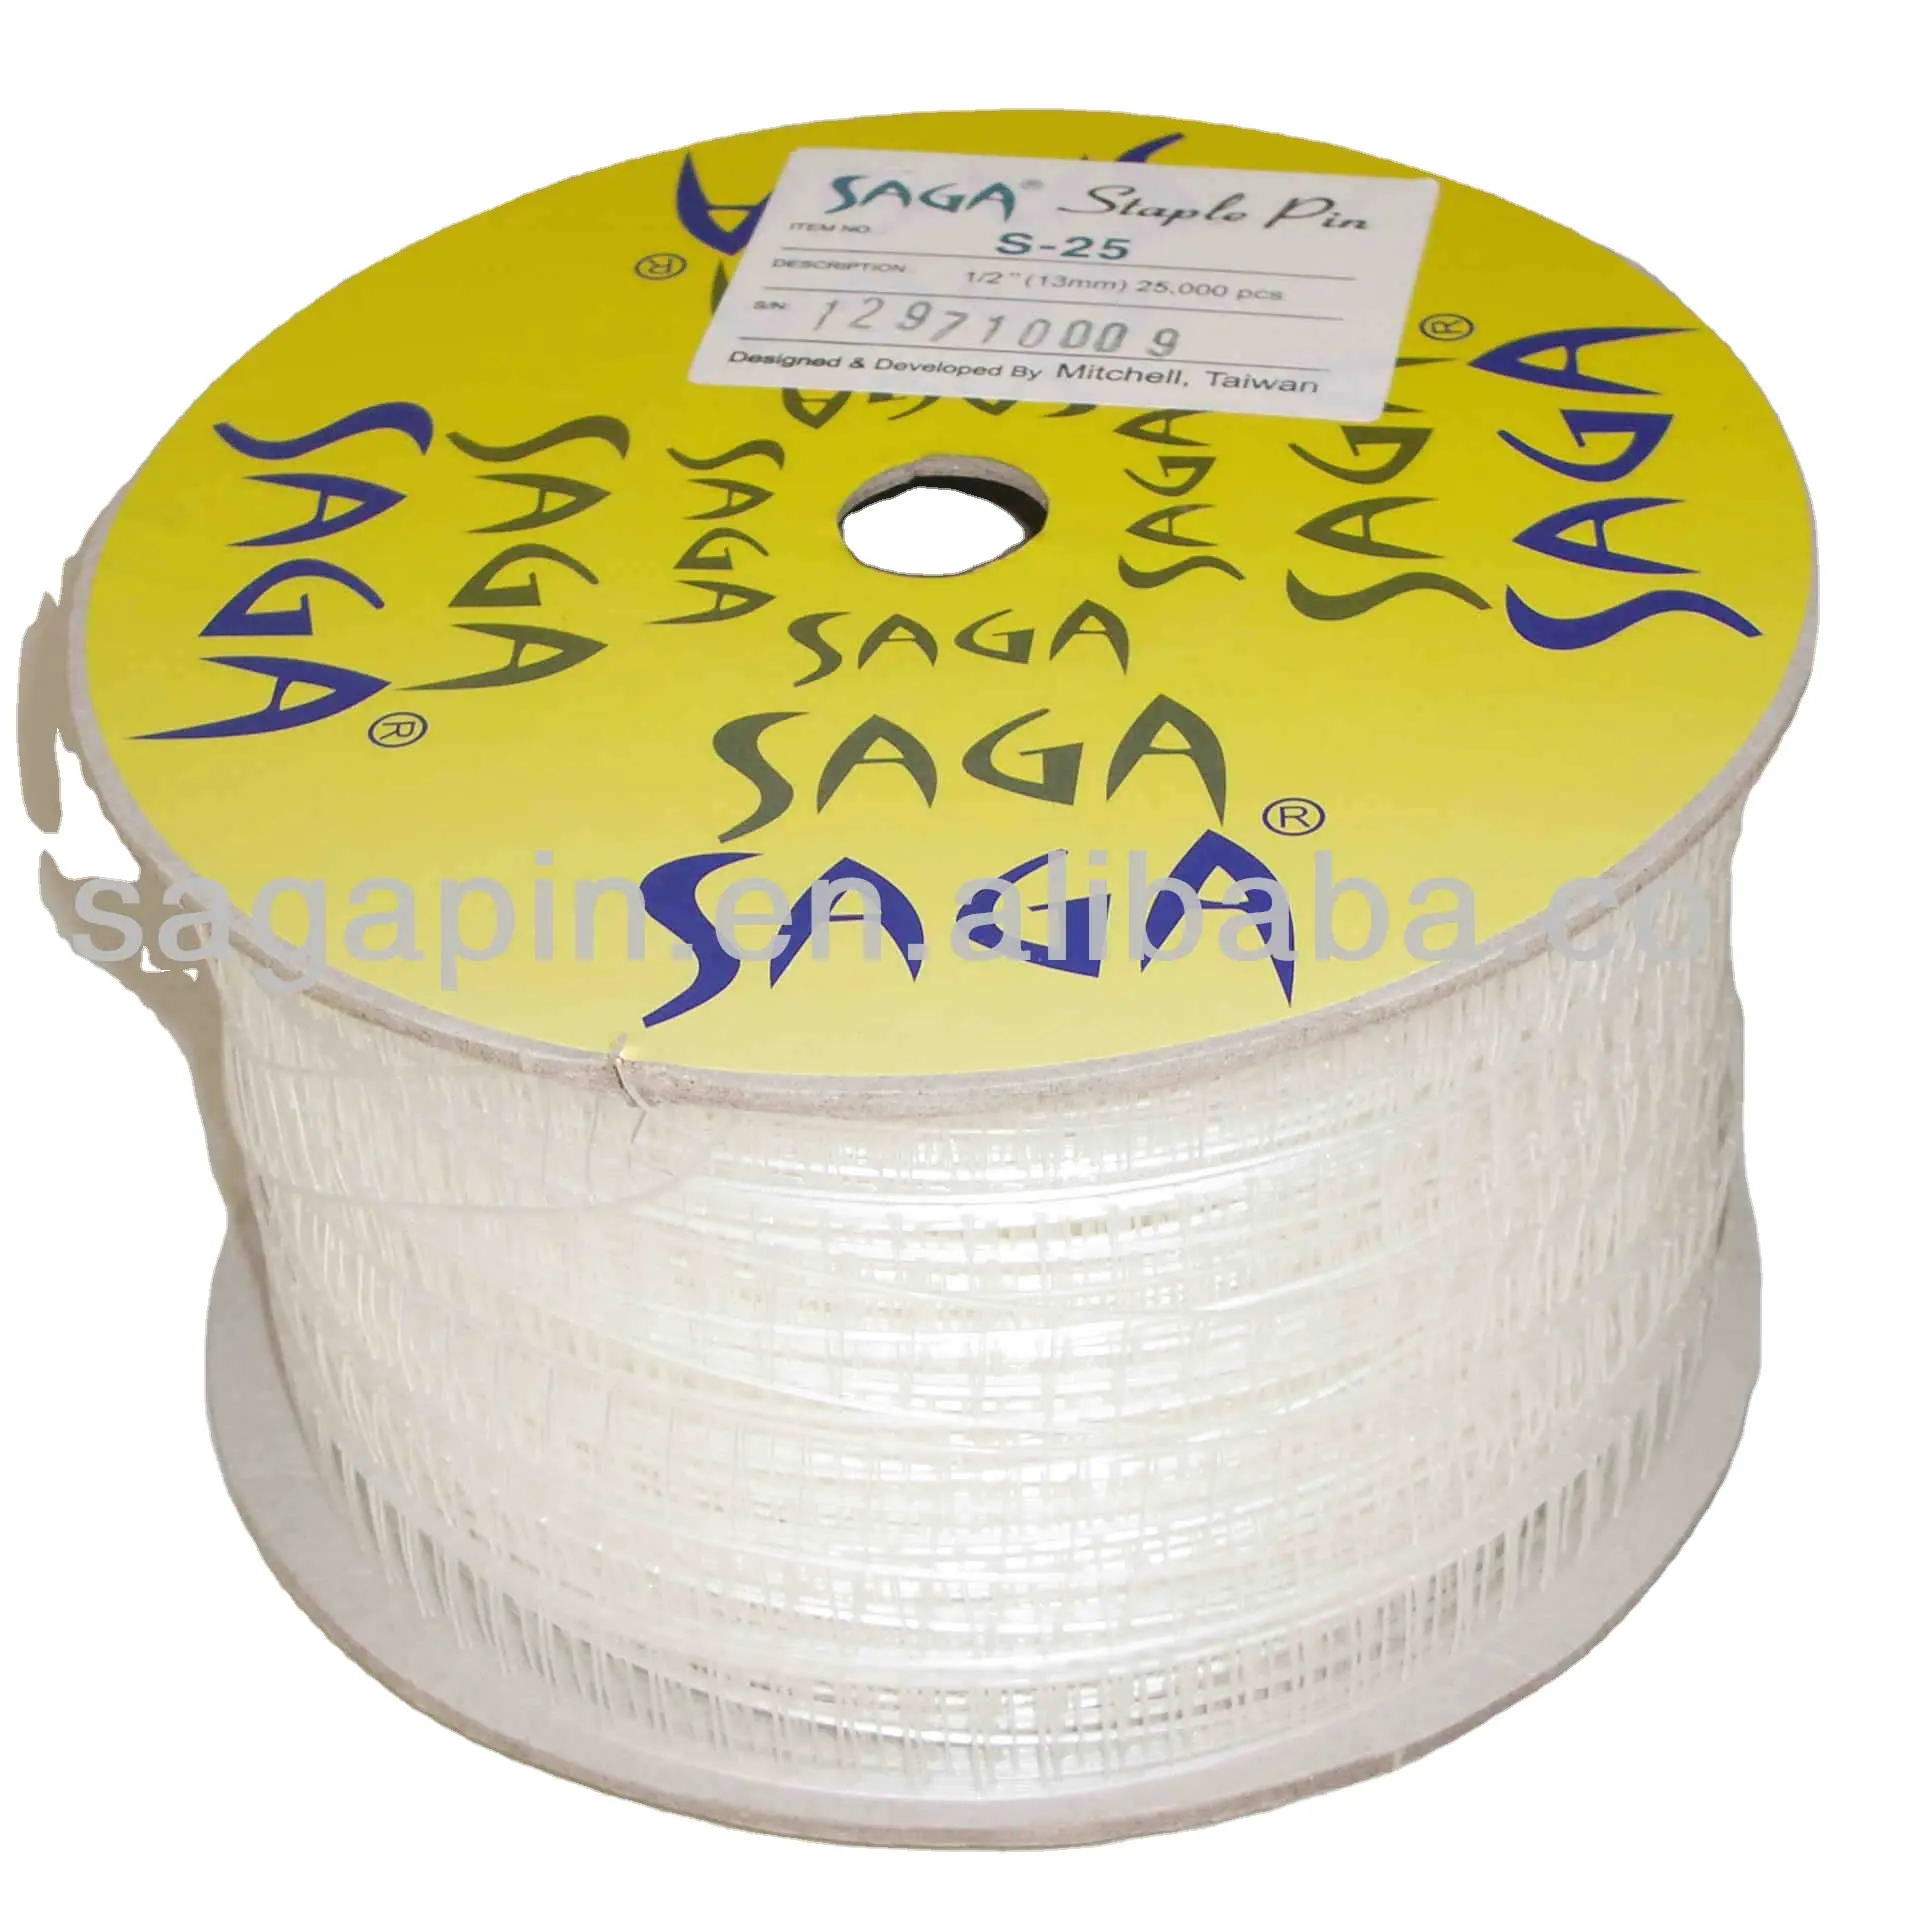 SAGA customized label plastic fastener, jeans washing tag pin,S-25 plastic pins staple